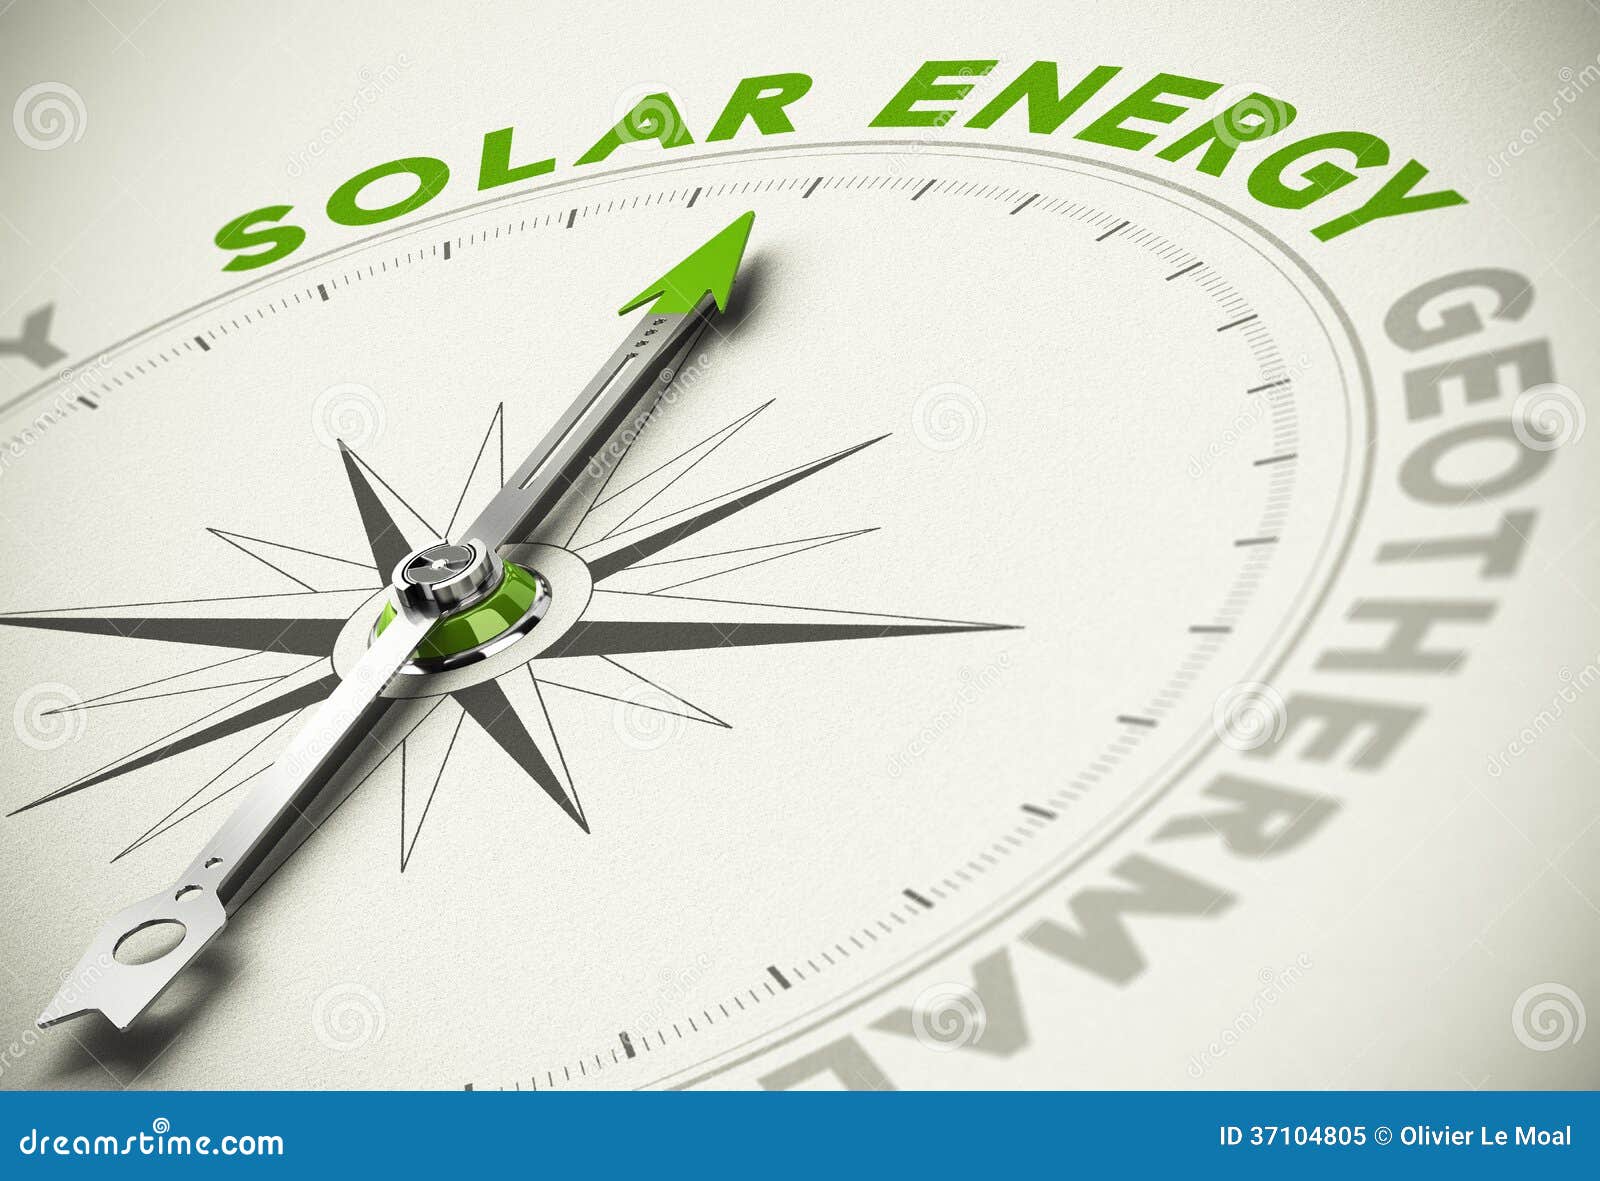 green energies choice - solar energy concept